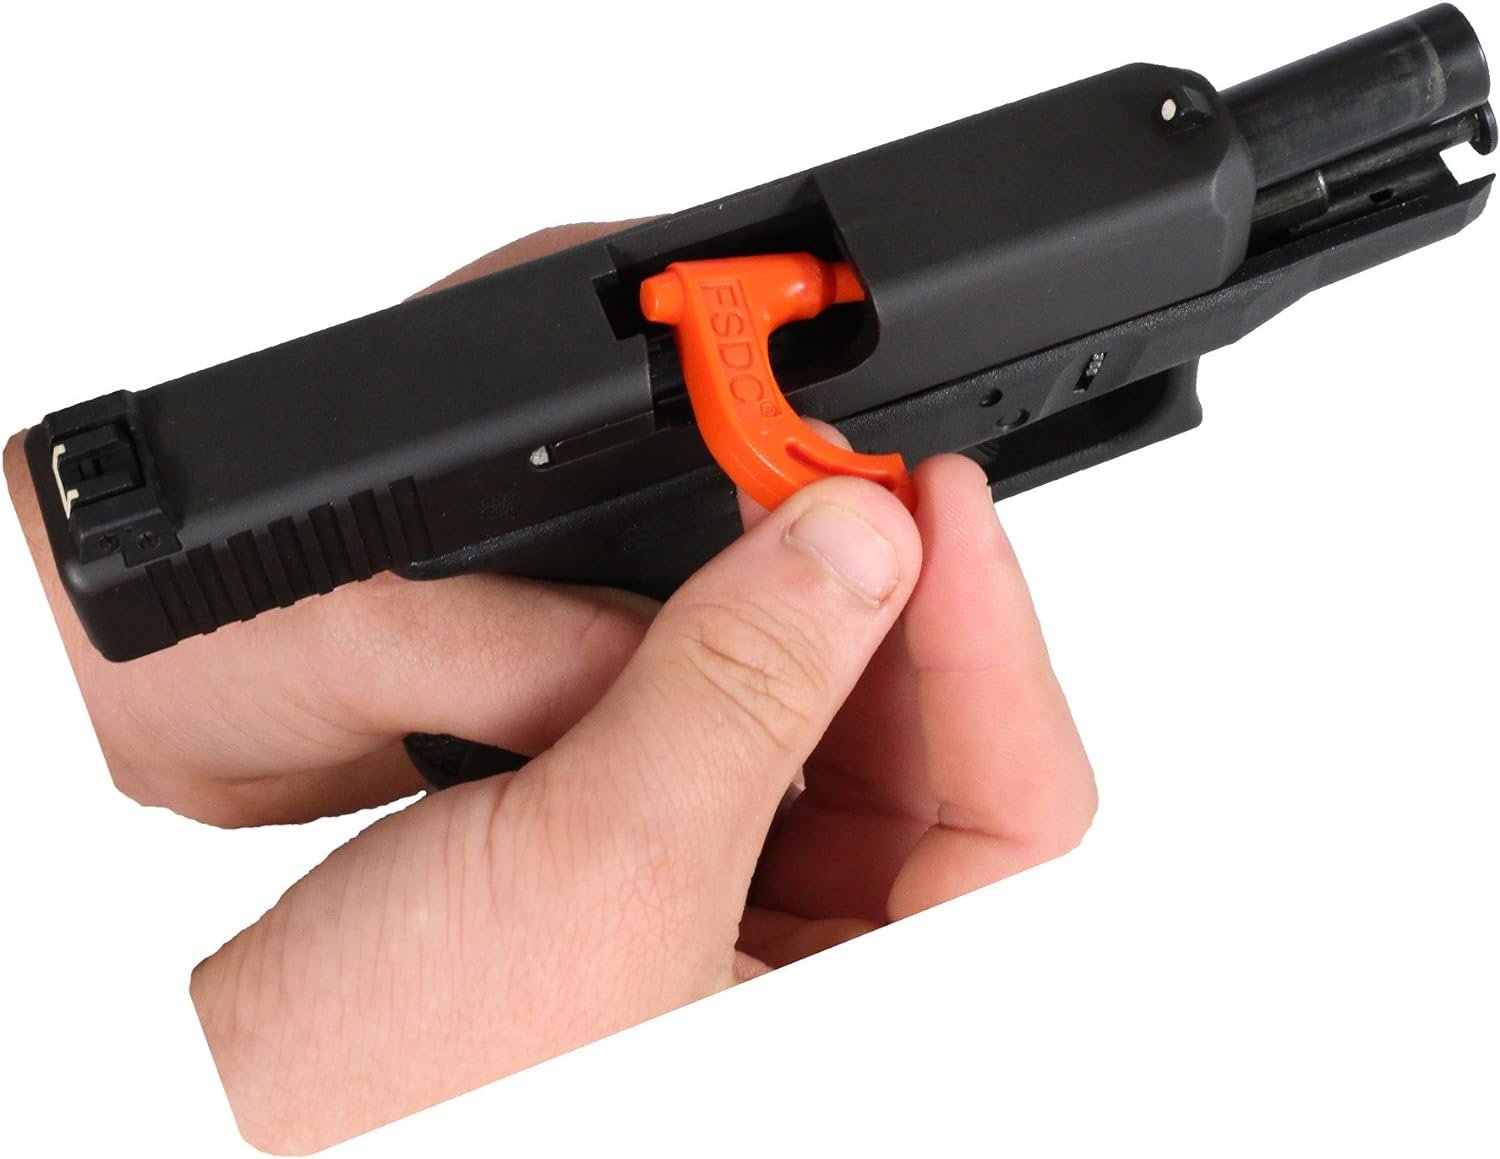 FSDC-350PRCF Pistol/Handgun Chamber Safety Flag Review